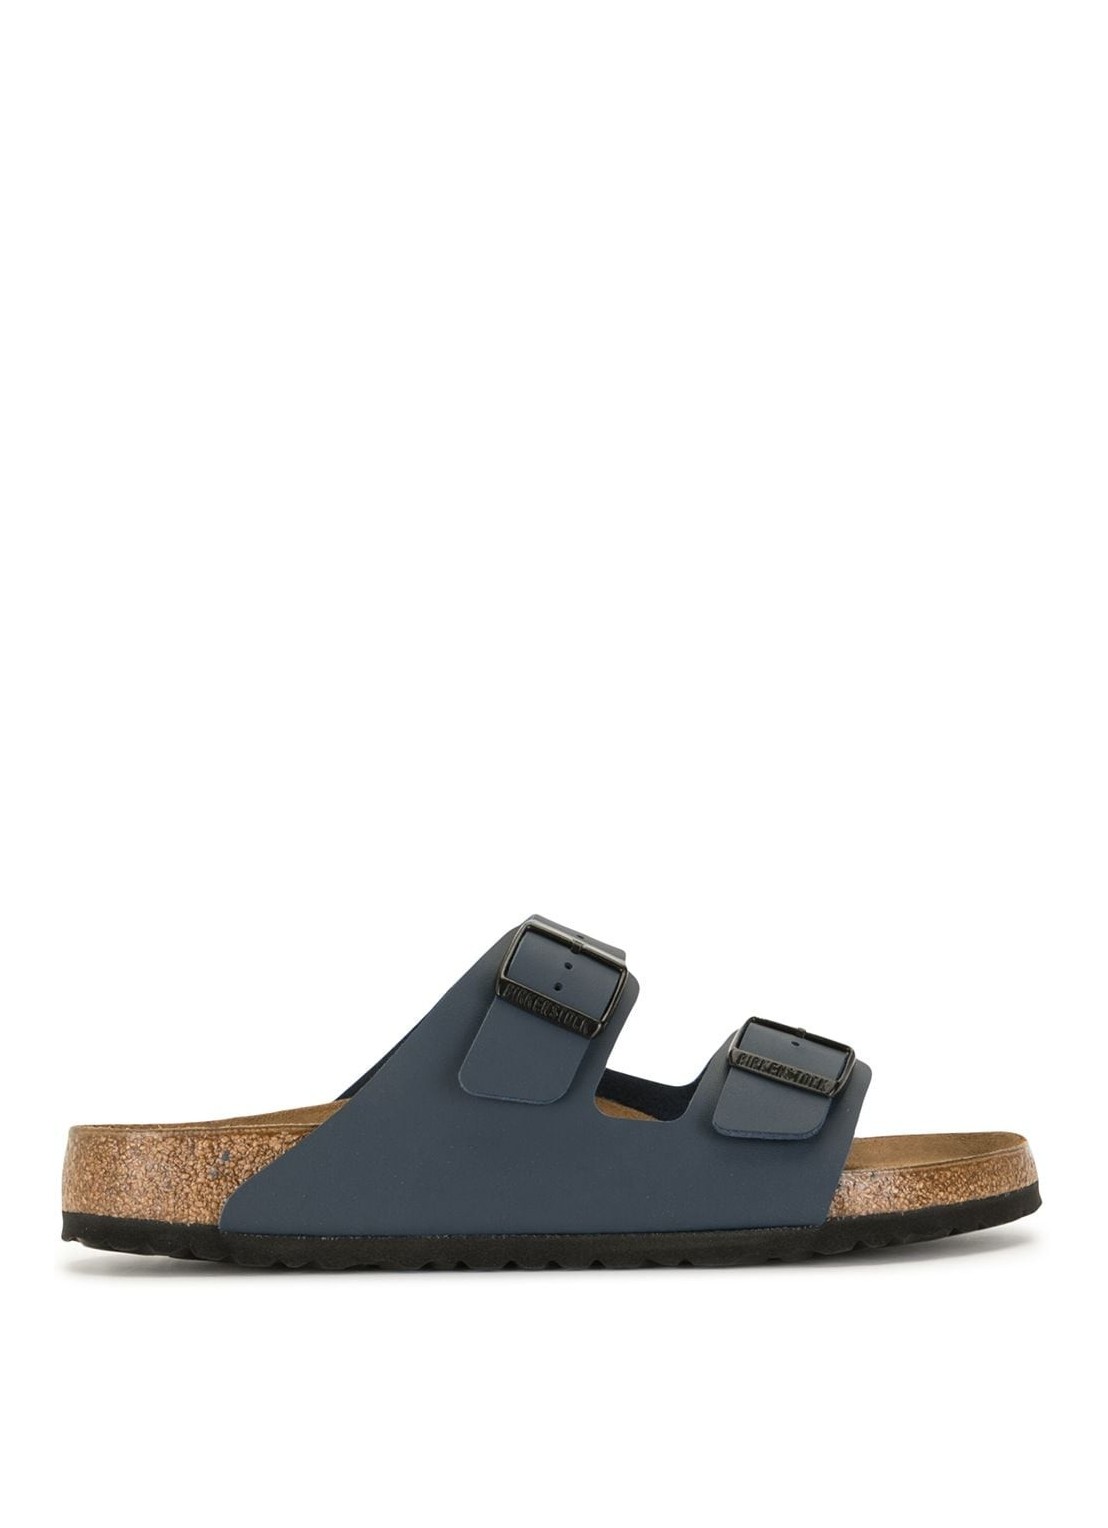 Sandalia birkenstock sandal man arizona bf 51751 blue talla 44
 